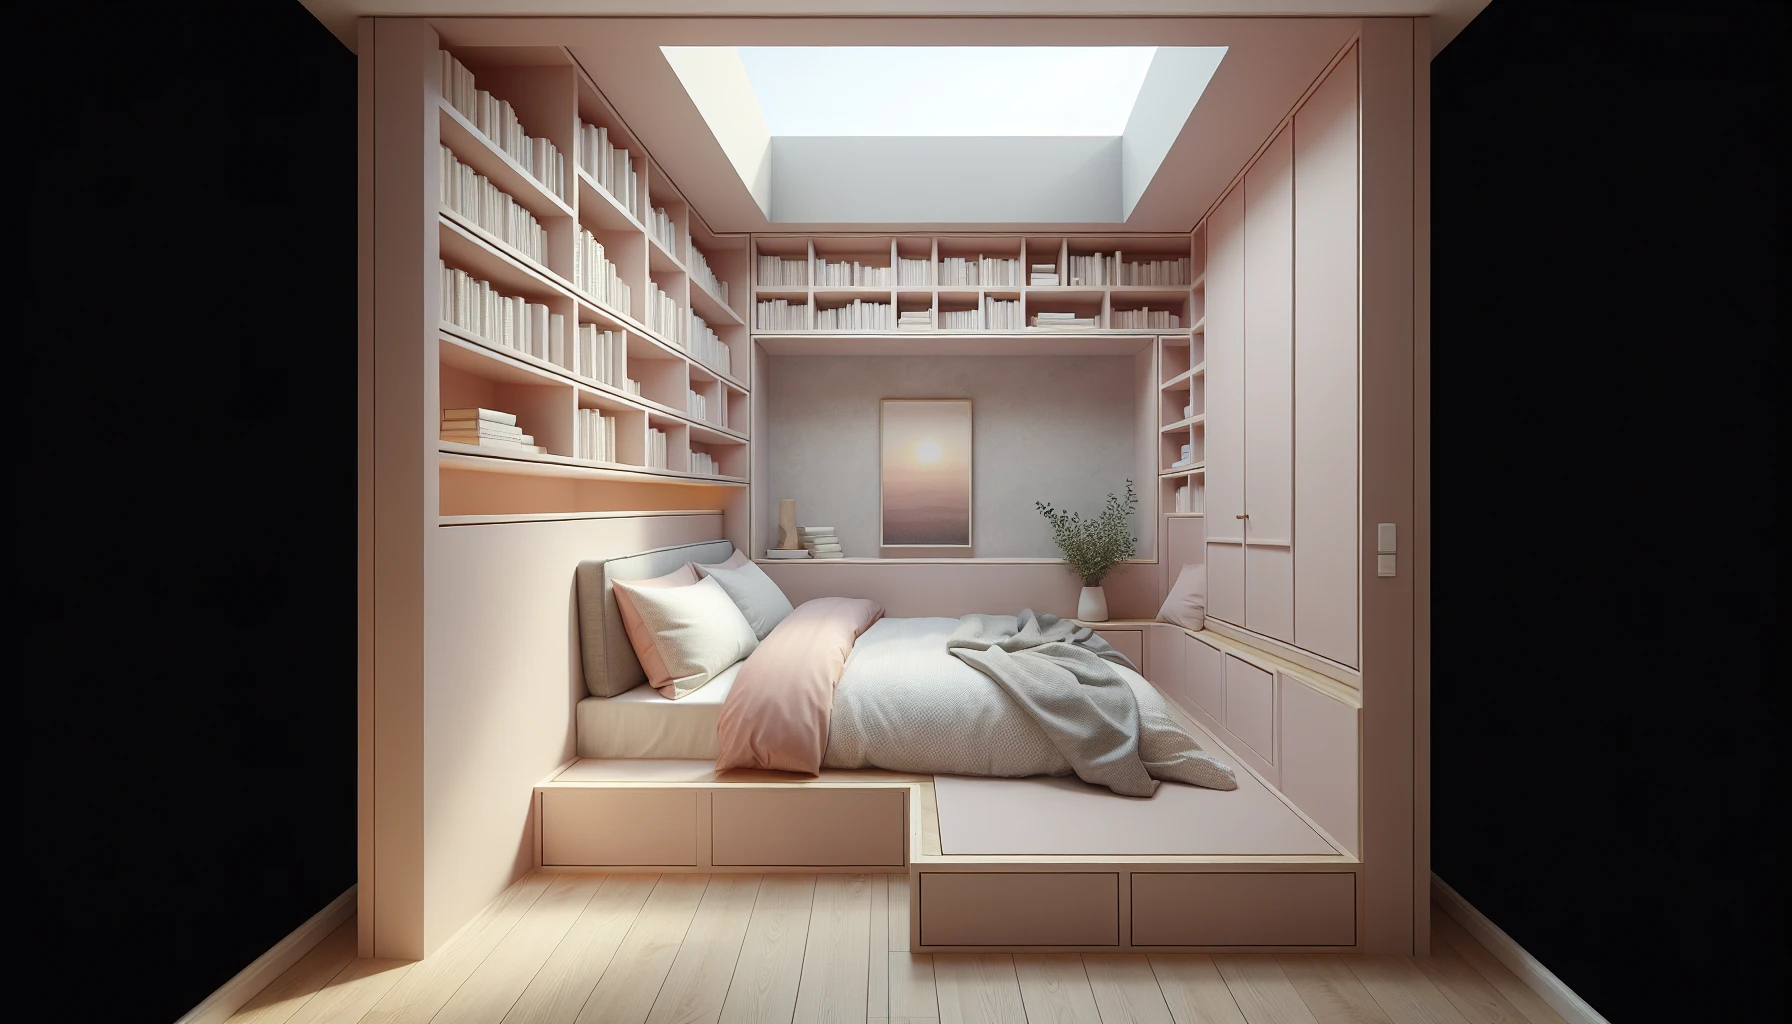 13 Amazing Ideas for Small Master Bedroom Design - 72a9c6af Dbb4 4462 8b02 Bb07bbc6875a